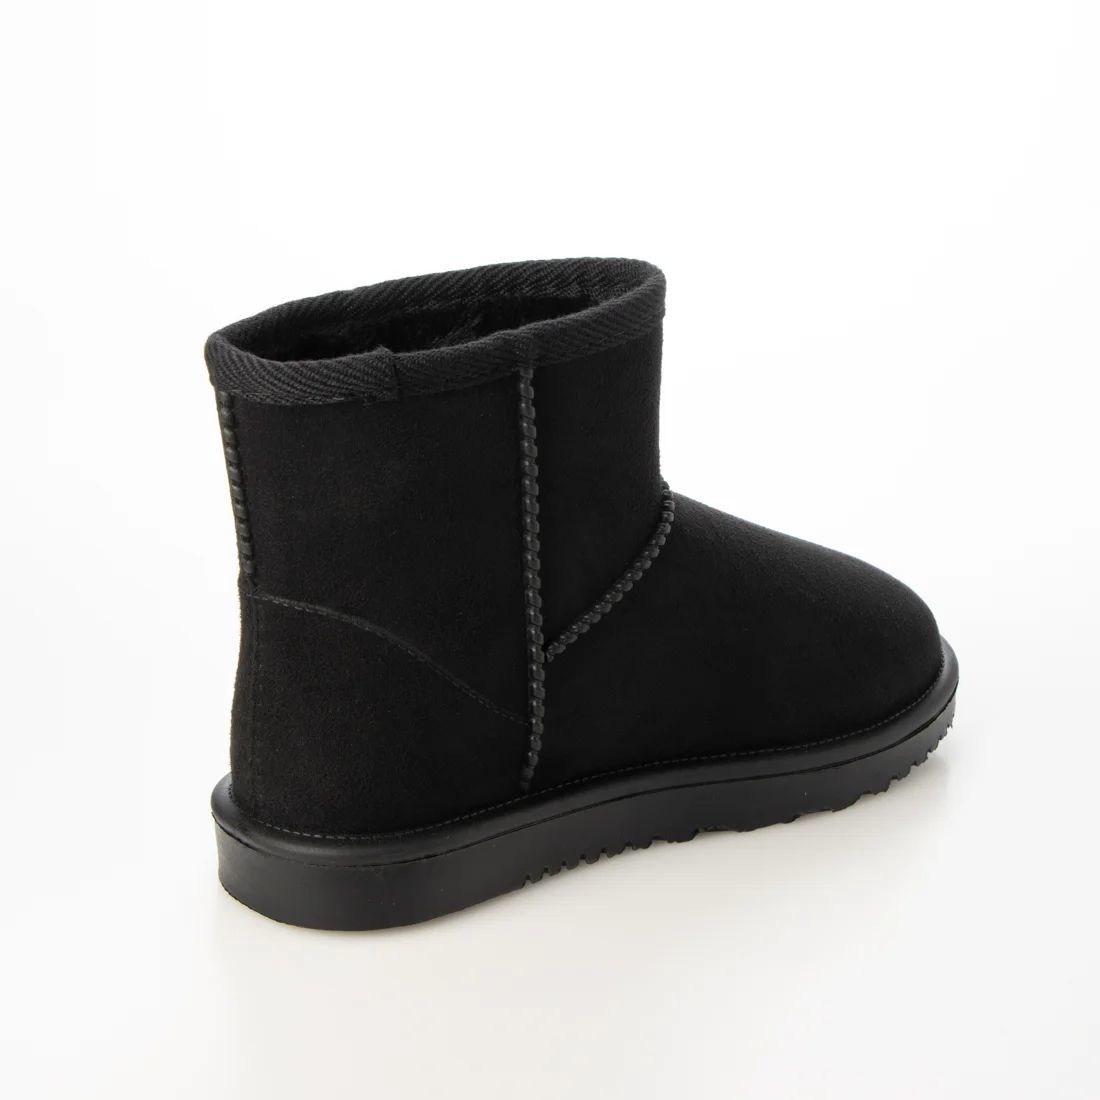  защищающий от холода ботинки мутон ботинки короткие сапоги новый товар [22076-BLK-220]22.0cm замша style Family размер 